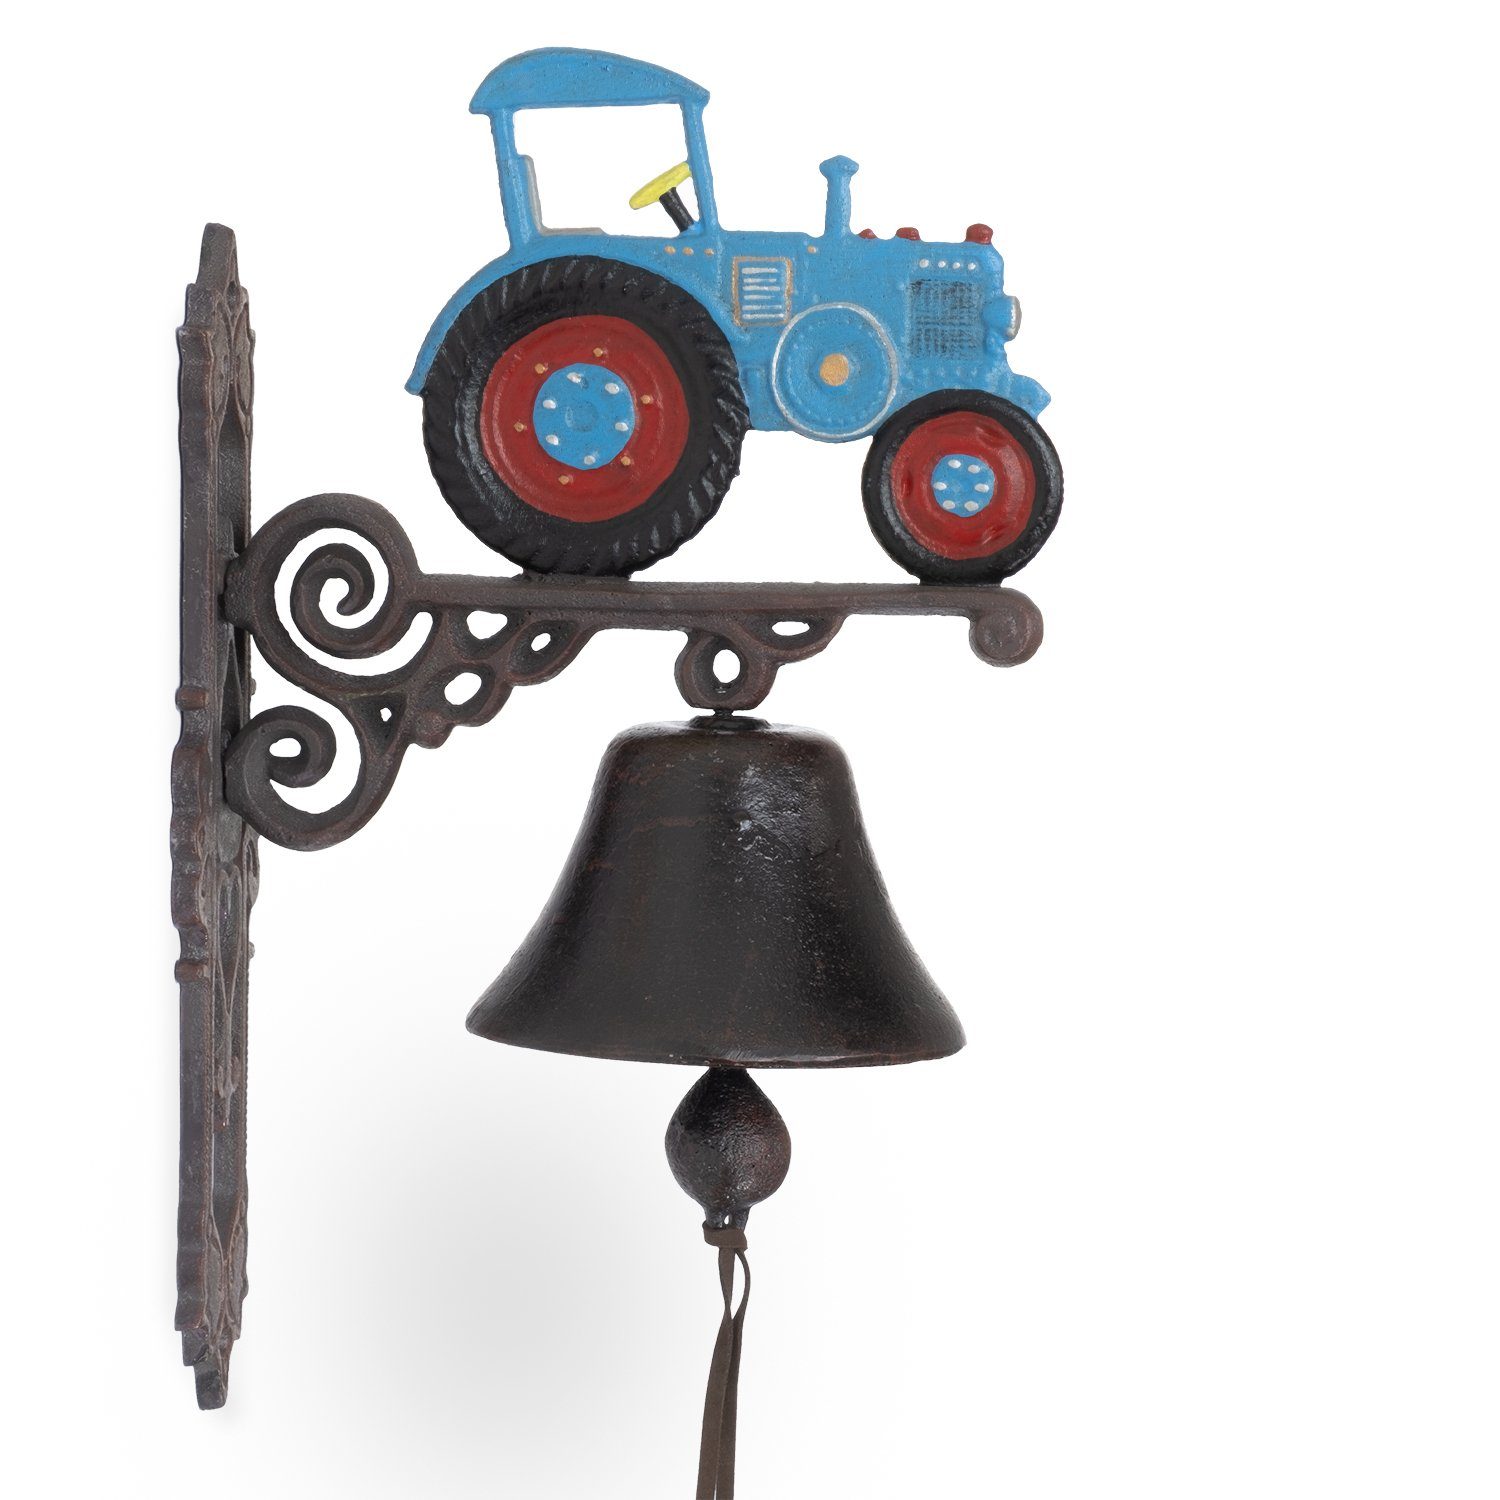 Moritz Trecker Gong blau, Glocke Wandglocke Gartenfigur Landhaus Glocke Antik Traktor Gusseisen (Wandglocke), Klingel Türglocke